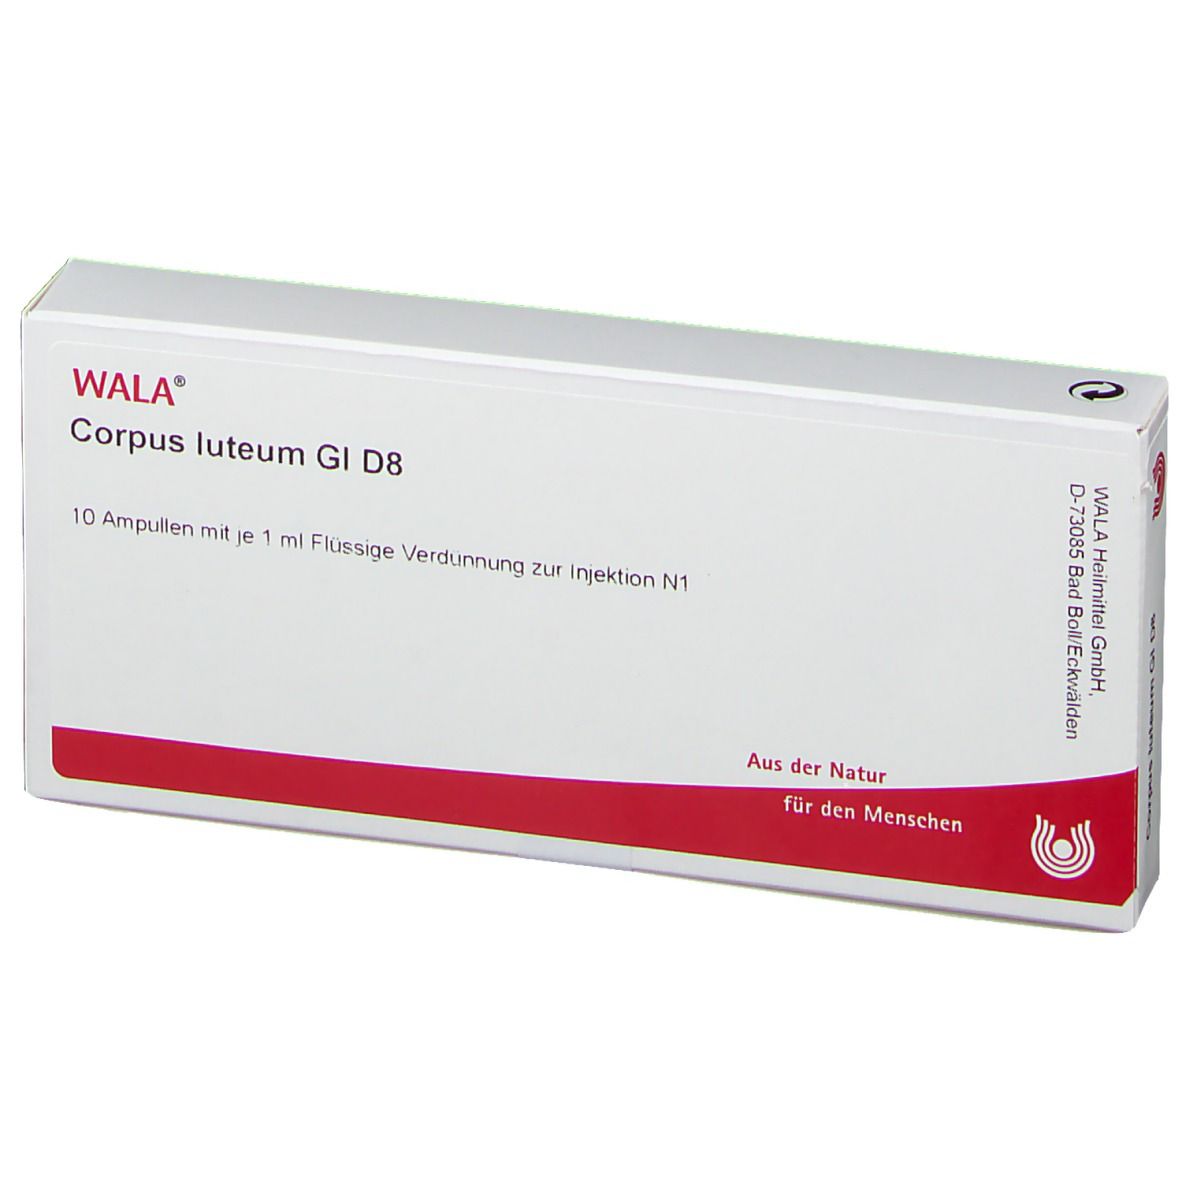 WALA® Corpus luteum Gl D 8